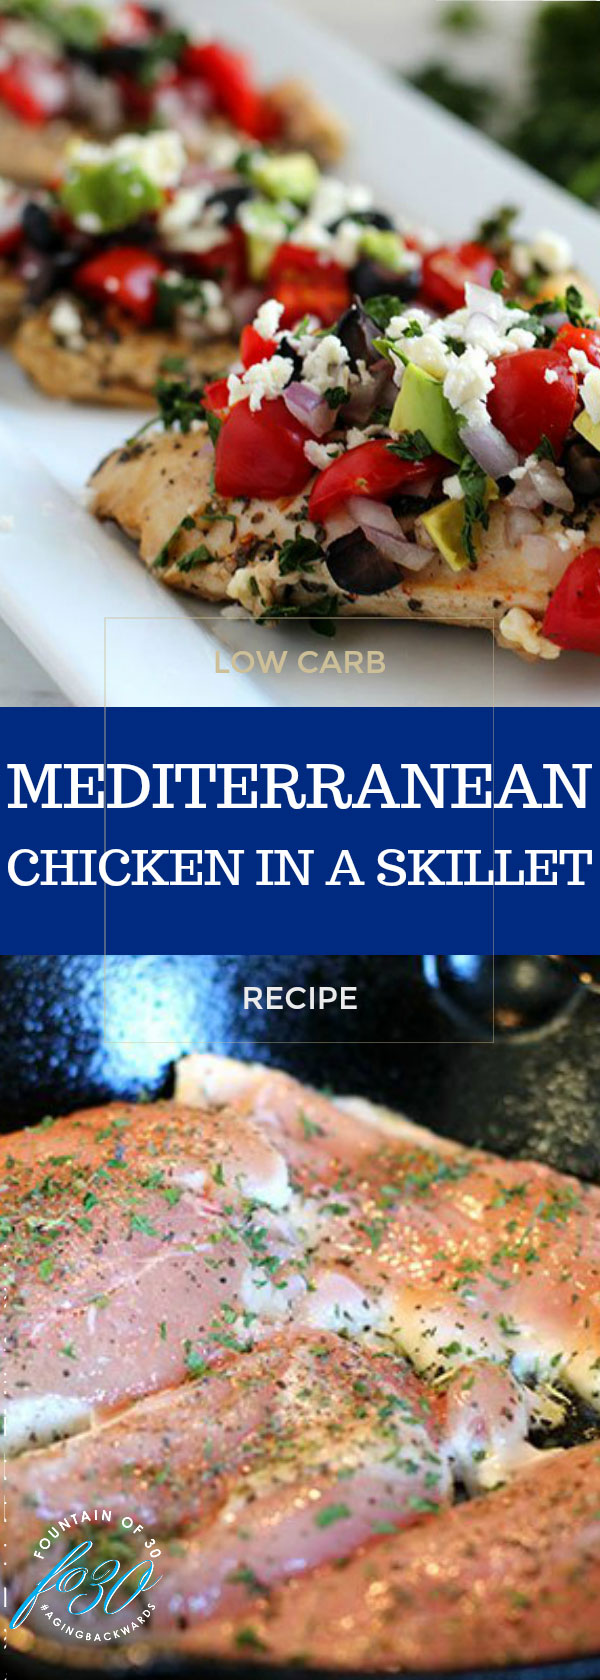 low carb chicken recipes mediterranean skillet